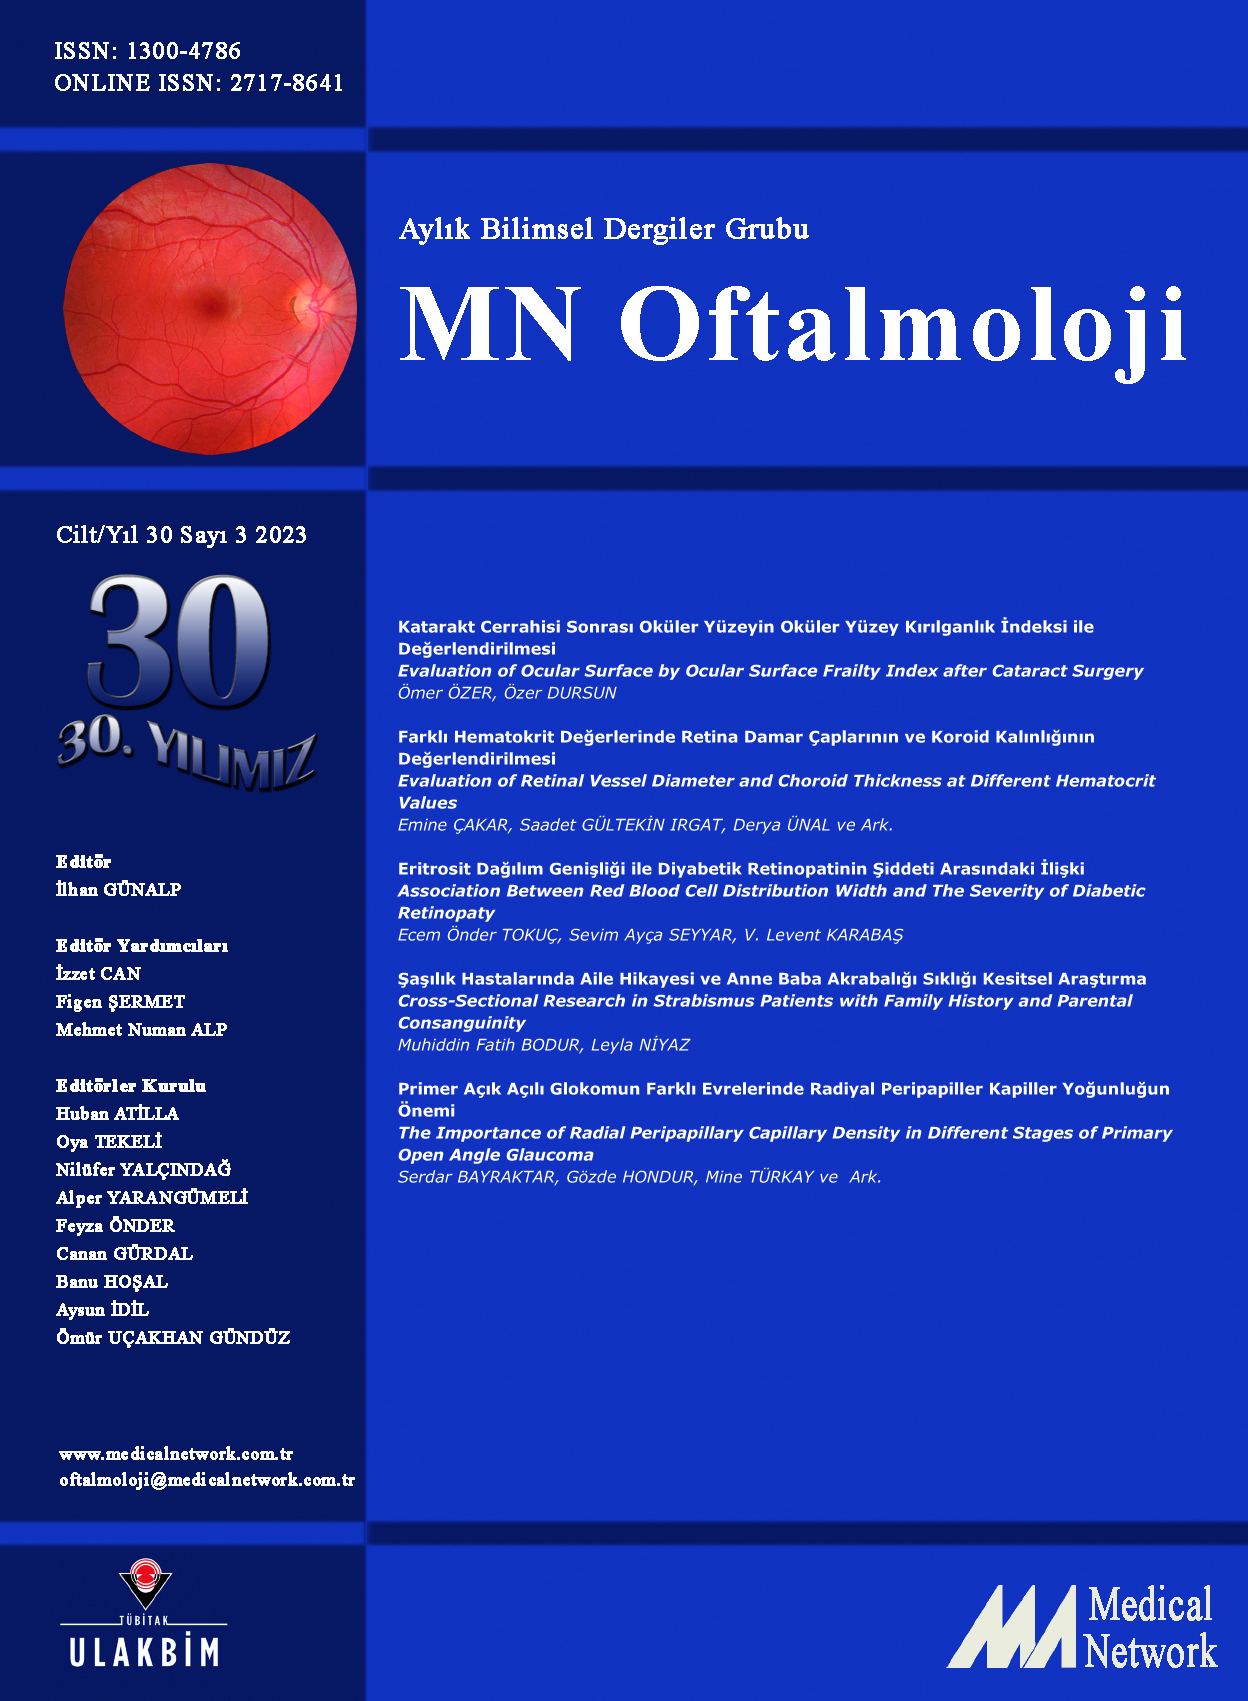 <p>MN Oftalmoloji Cilt: 30 Say: 3 2023 (MN Ophthalmology Volume: 30 No: 3 2023)</p>